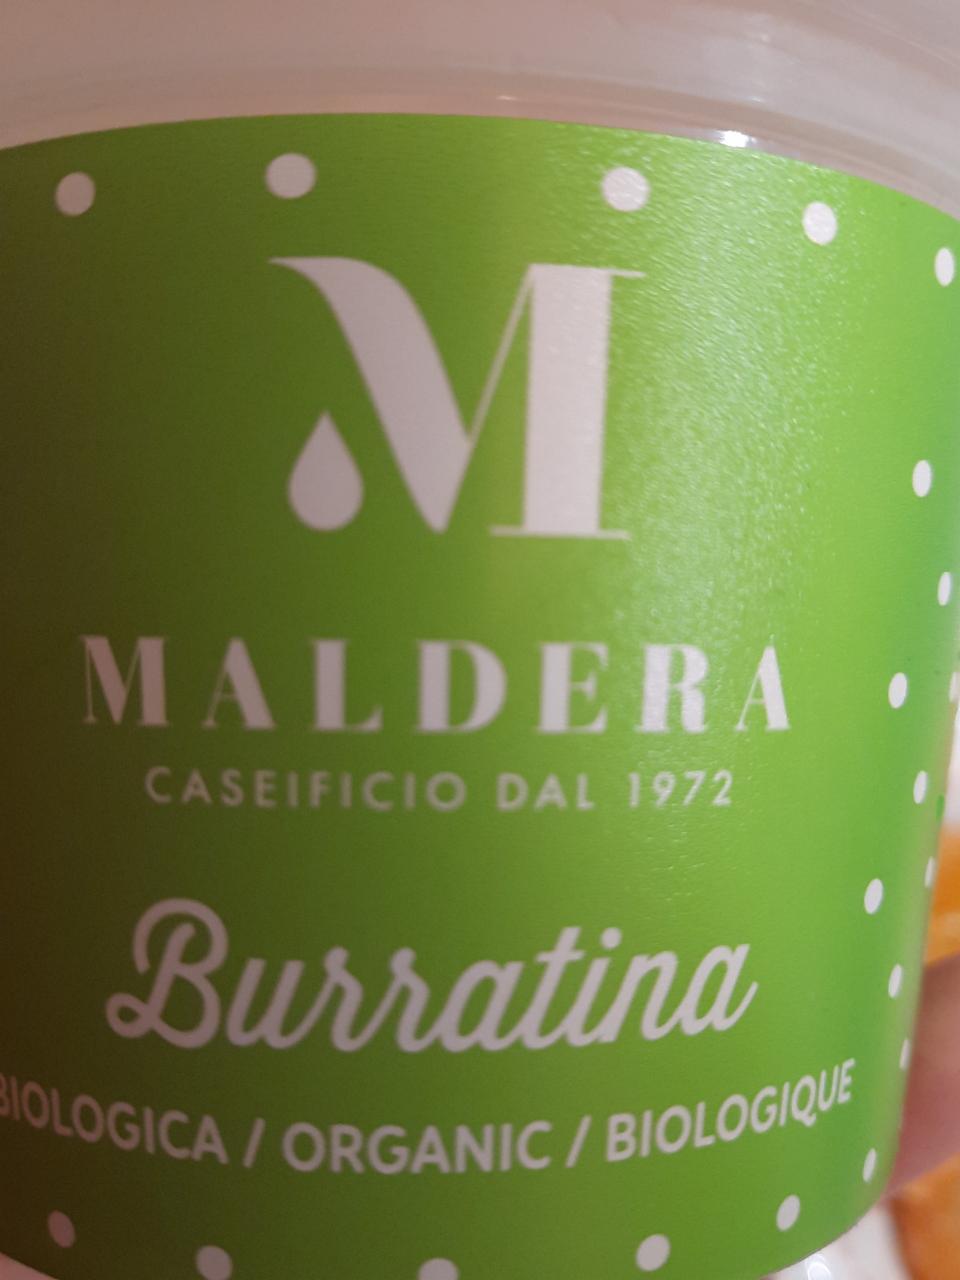 Fotografie - Burratina Biologica Maldera